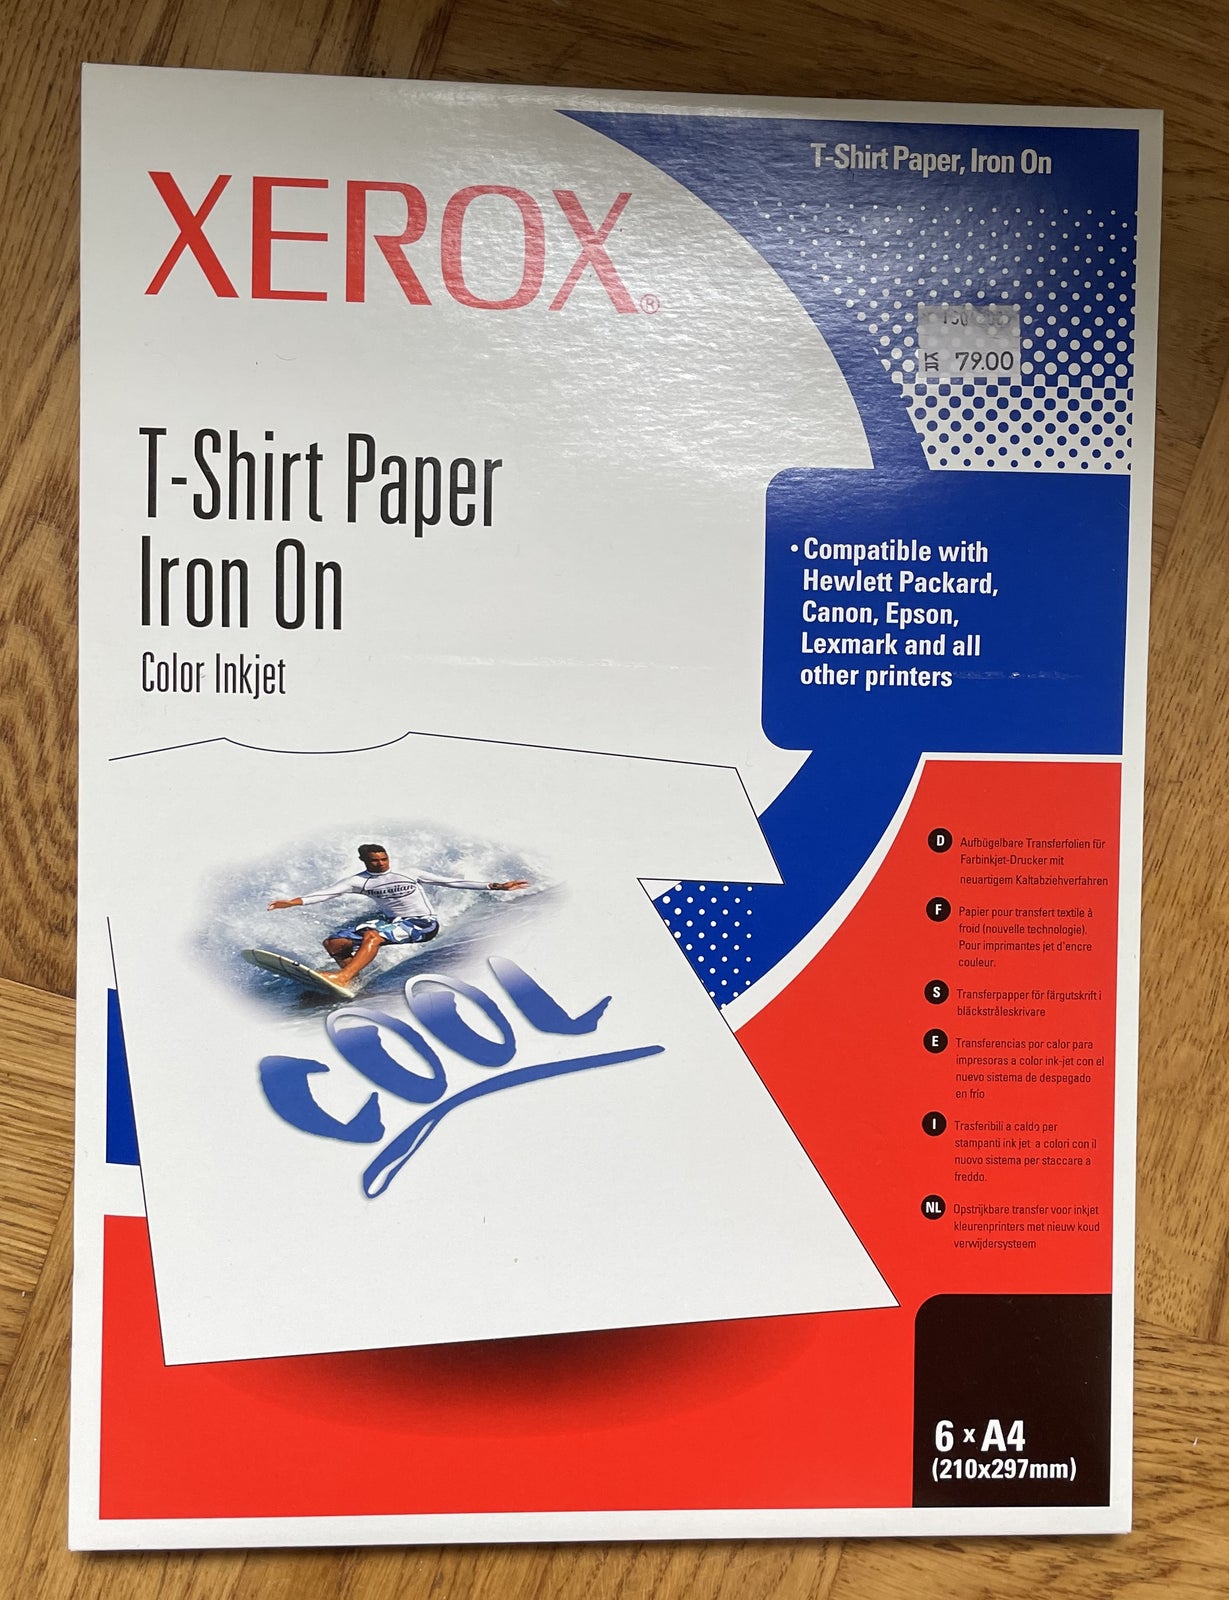 T-shirt paper iron on, Xerox, T-shirt